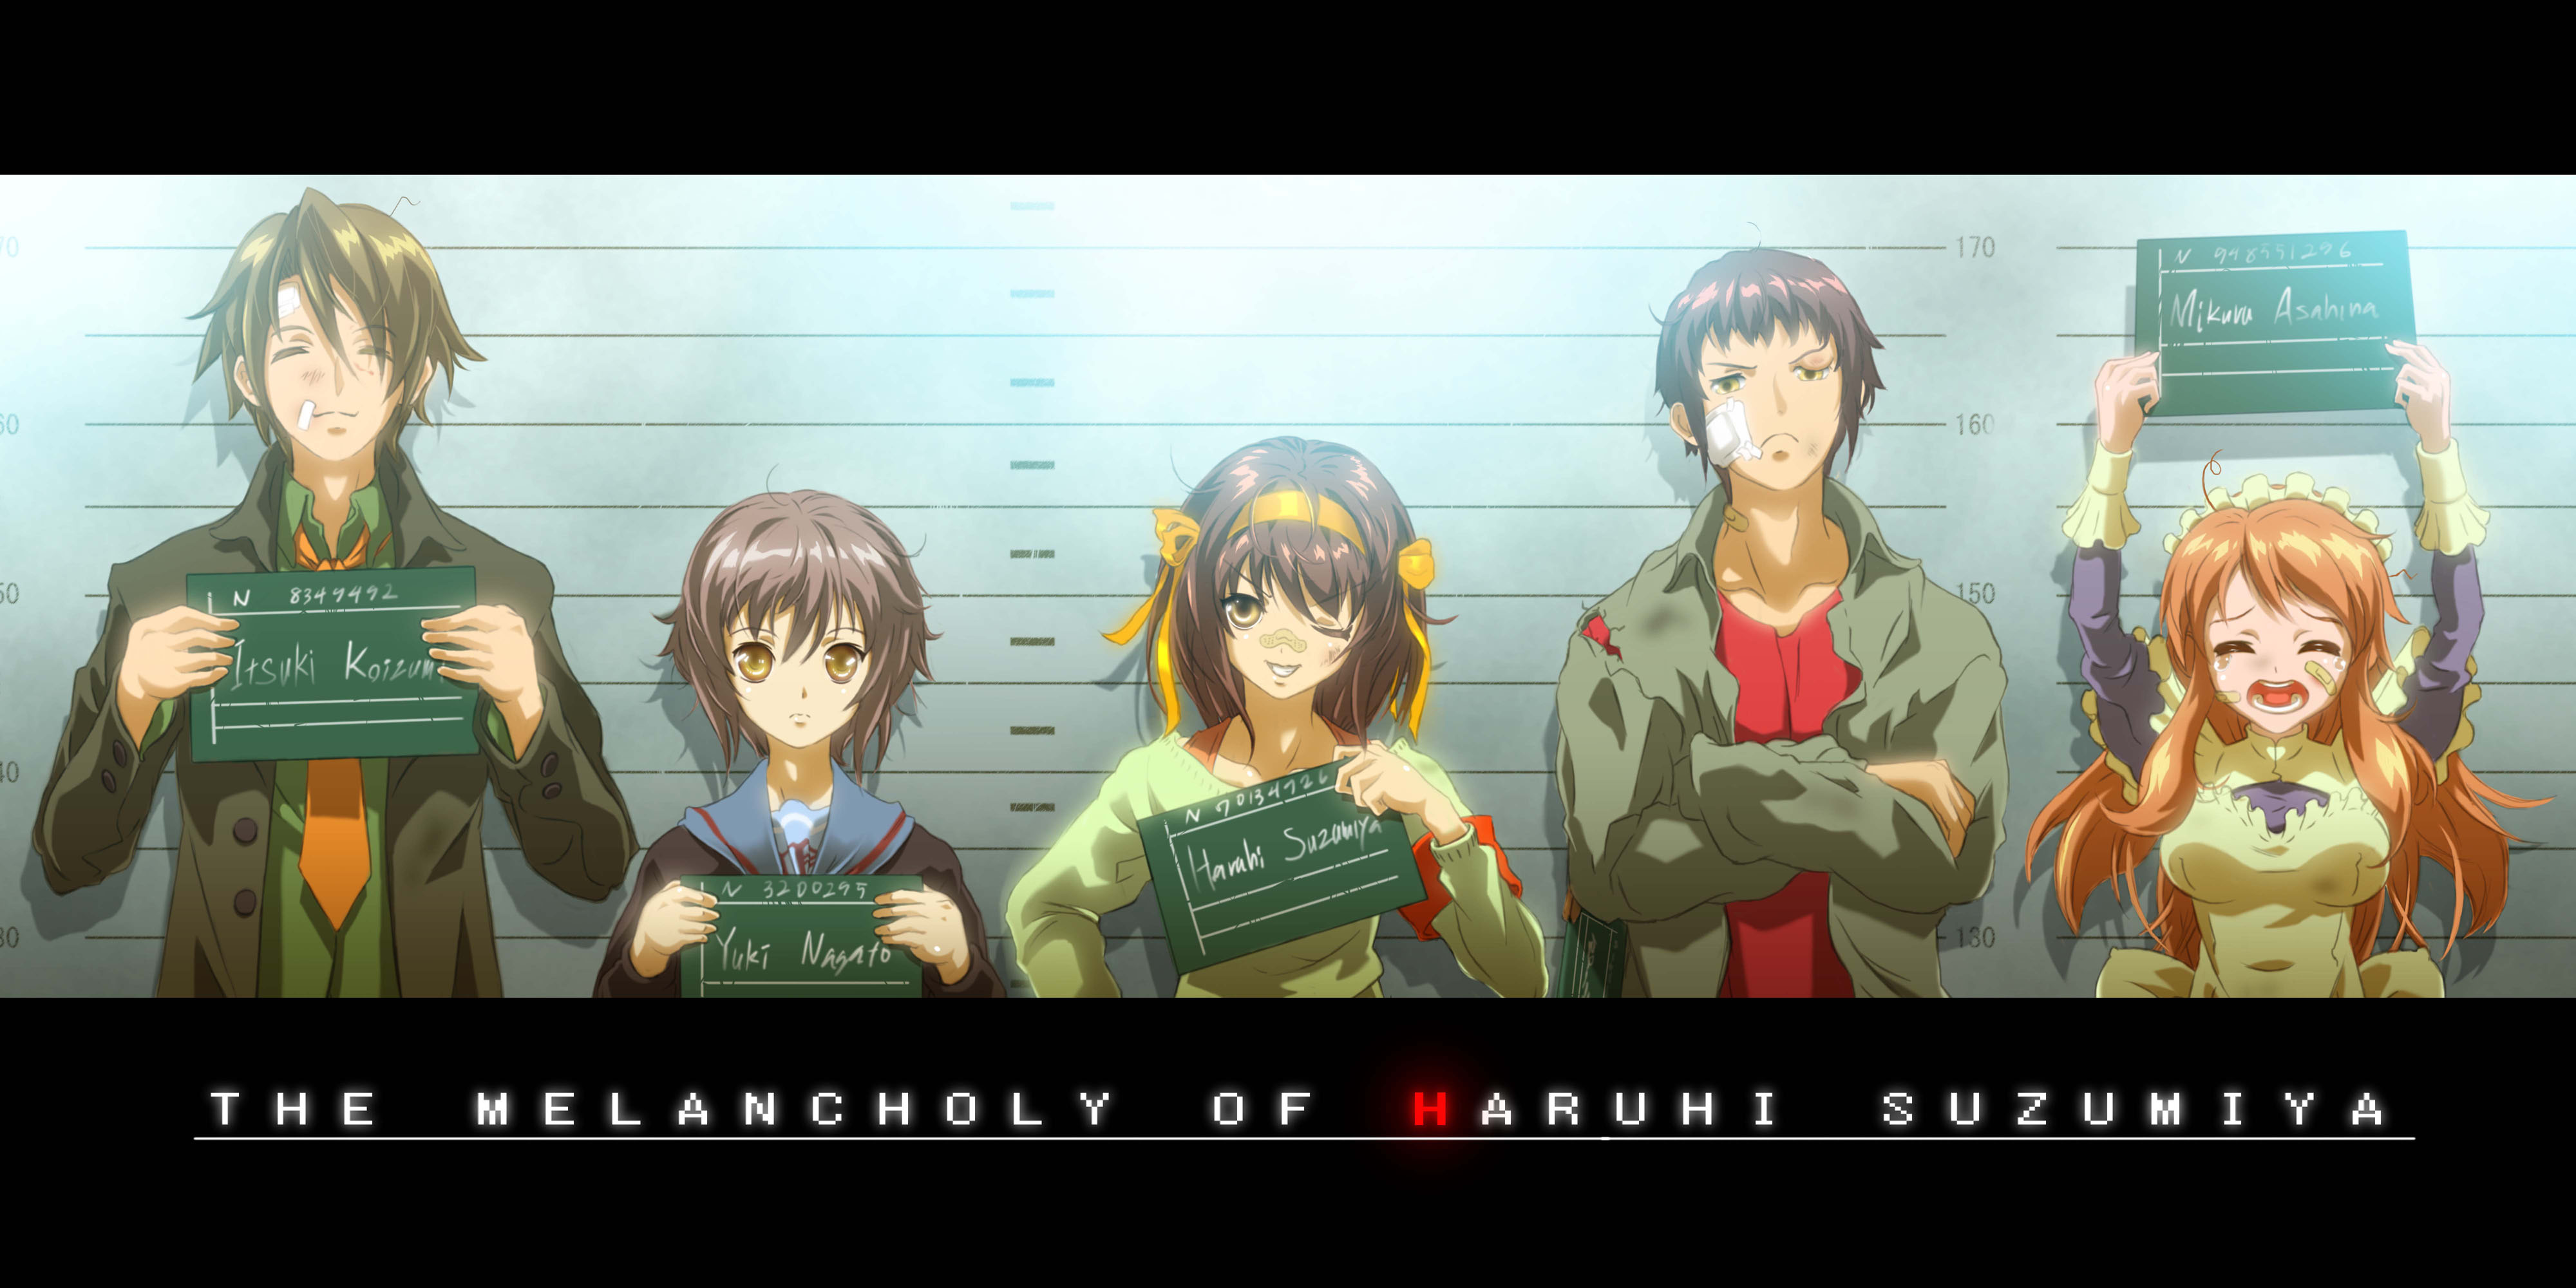 Coders Anime The Melancholy Of Haruhi Suzumiya